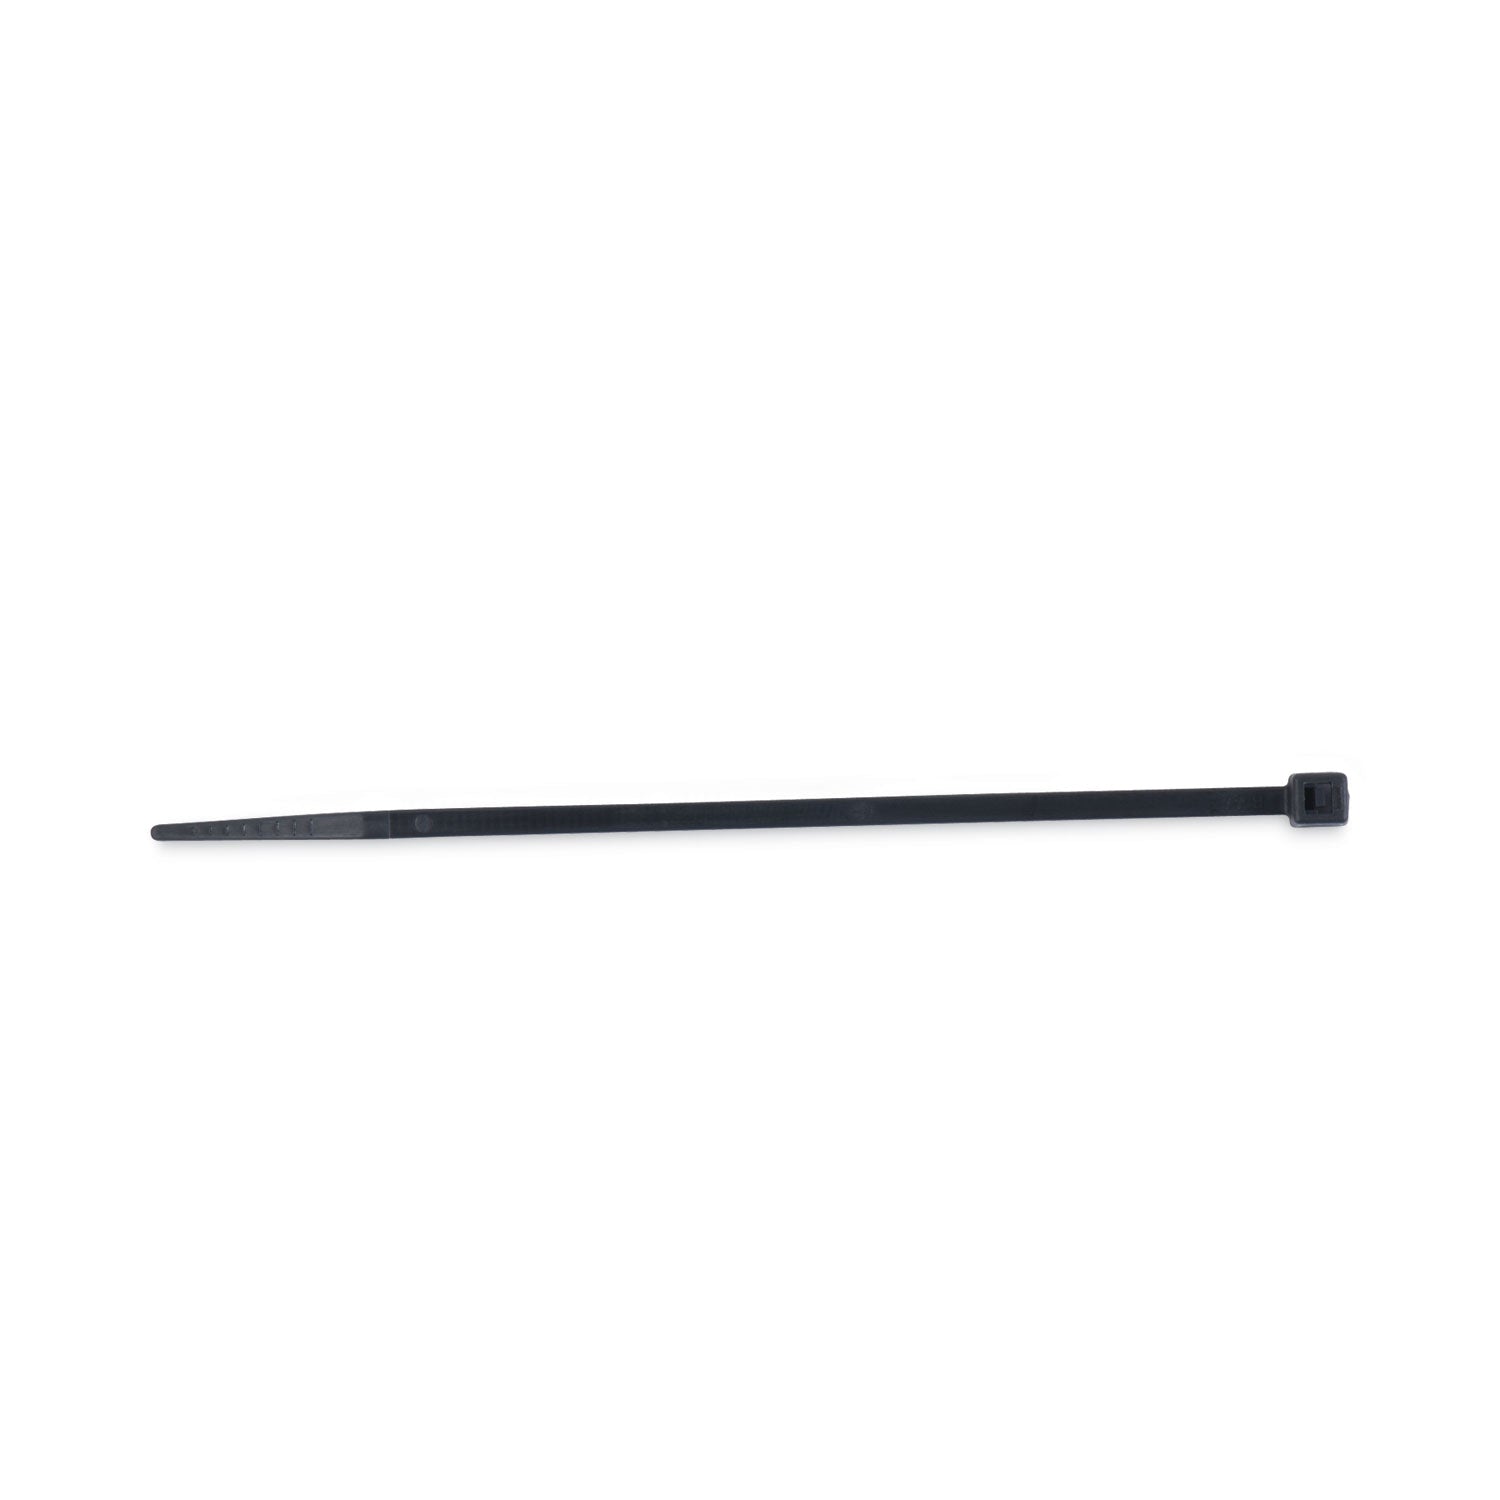 Nylon Cable Ties, 4 x 0.06, 18 lb, Black, 1,000/Pack - 